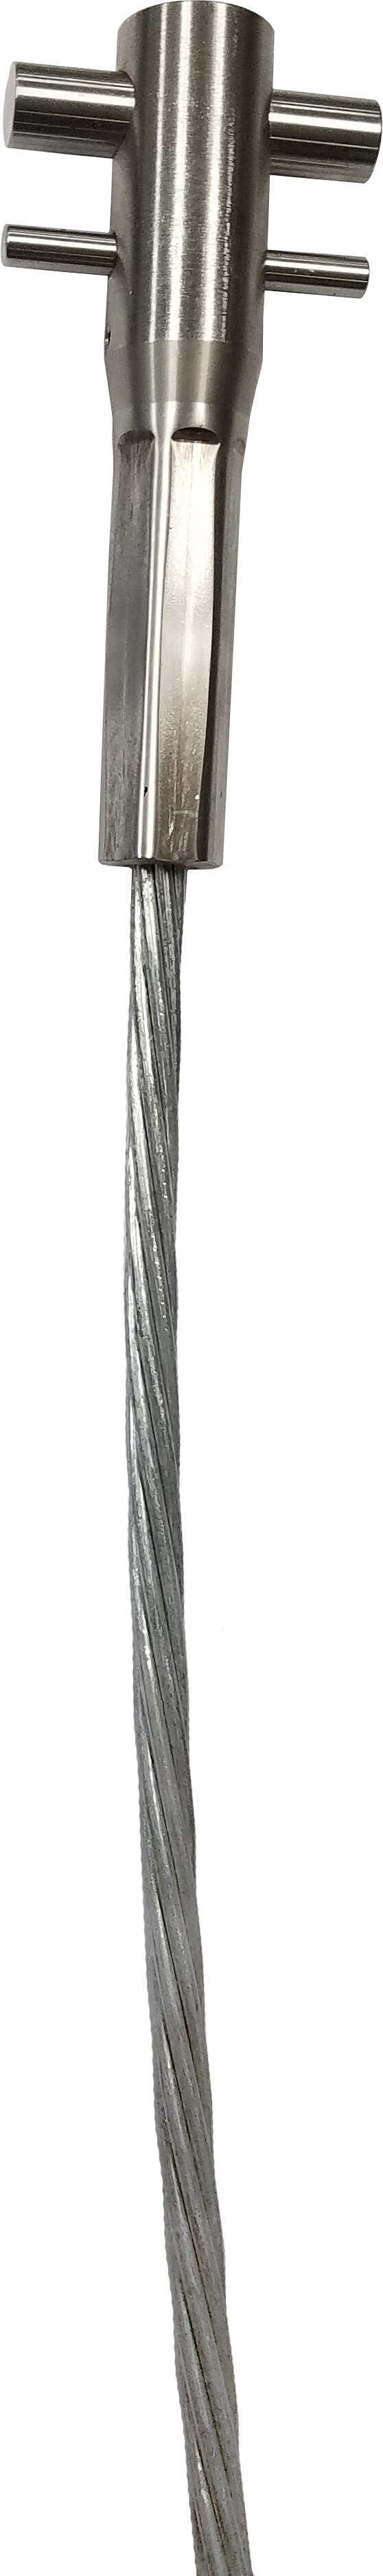 3M™ DBI-SALA® Lad-Saf™ Swaged Cable 6115019, 3/8 Inch, Galvanized Steel, 35 m_0